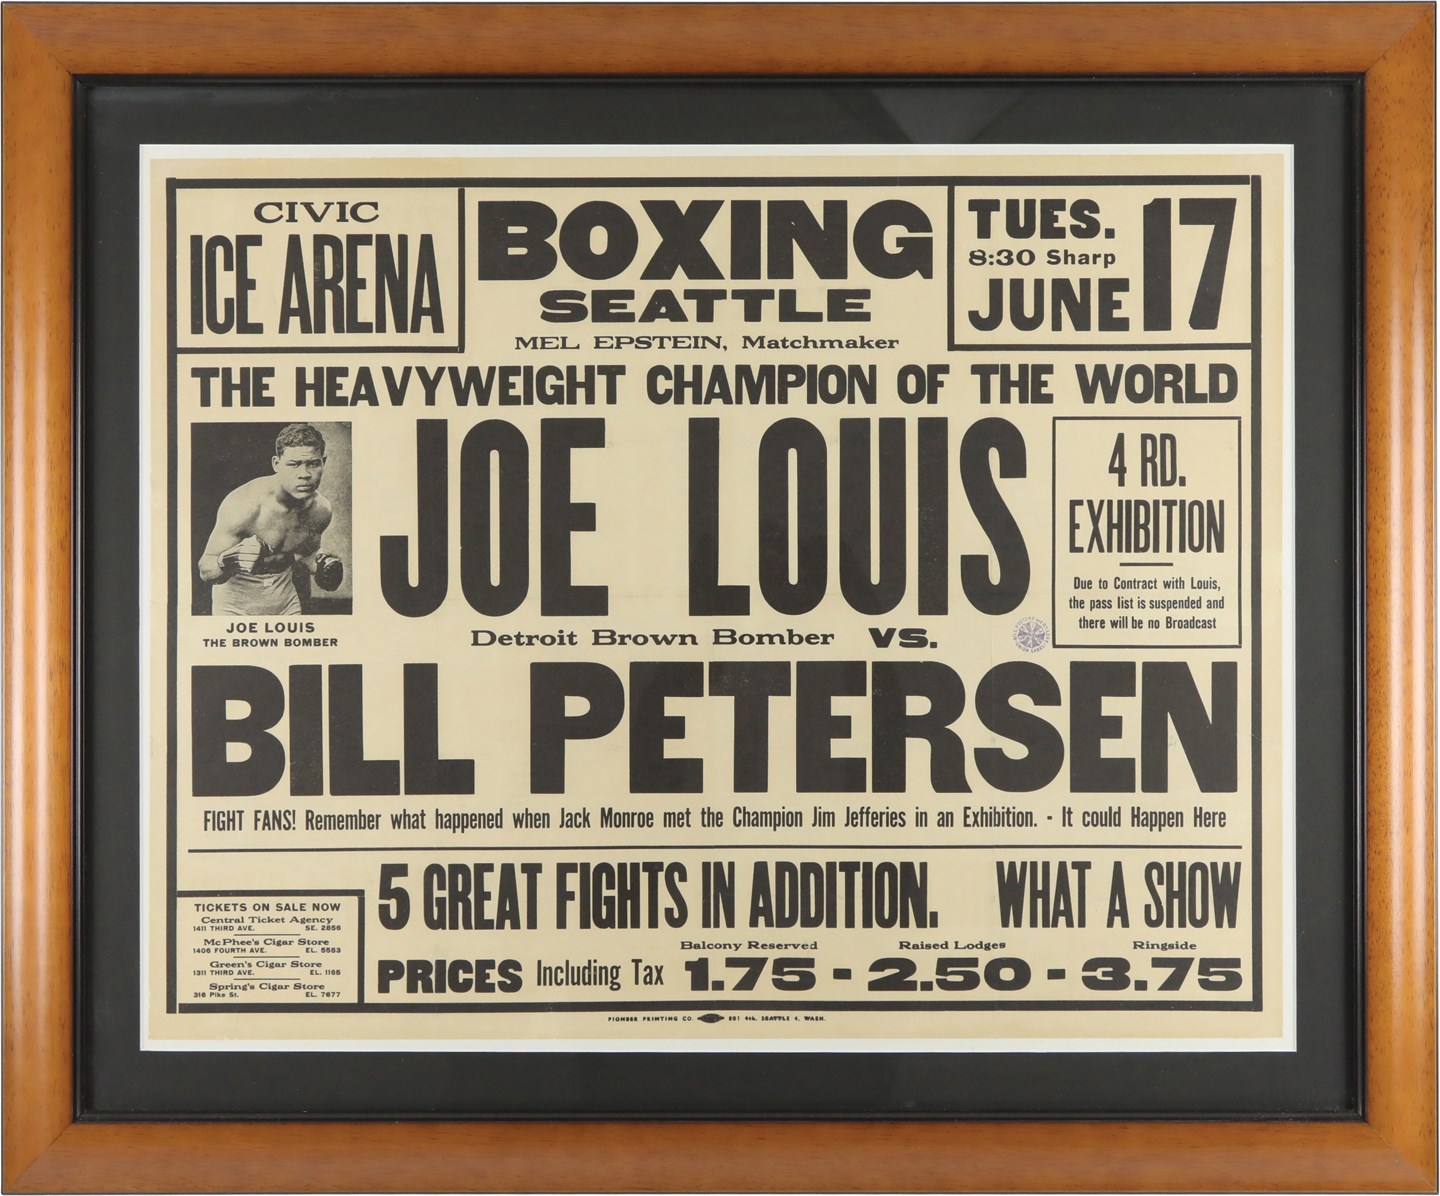 - 1947 Joe Louis vs. Bill Petersen On-Site Exhibition Fight Poster